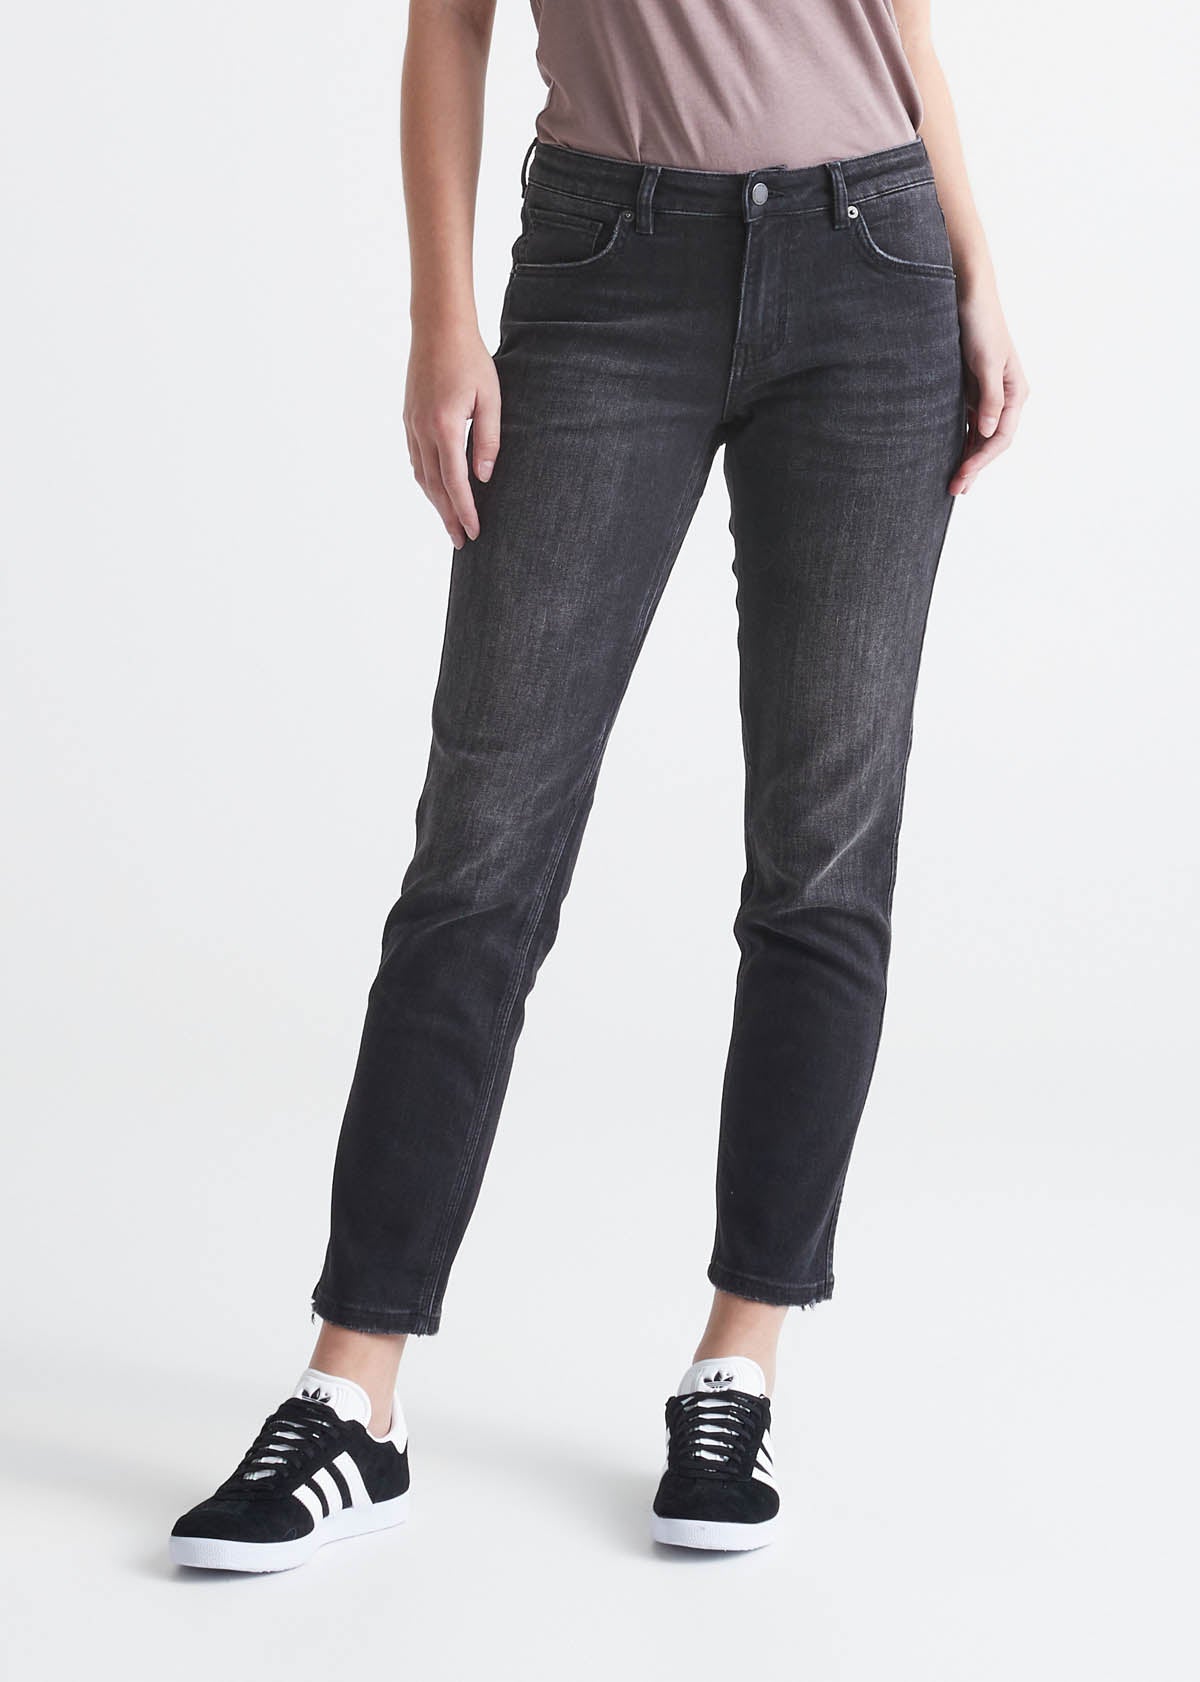 Vintage Ralph Lauren Jeans Black White Print Pants Women Size 4